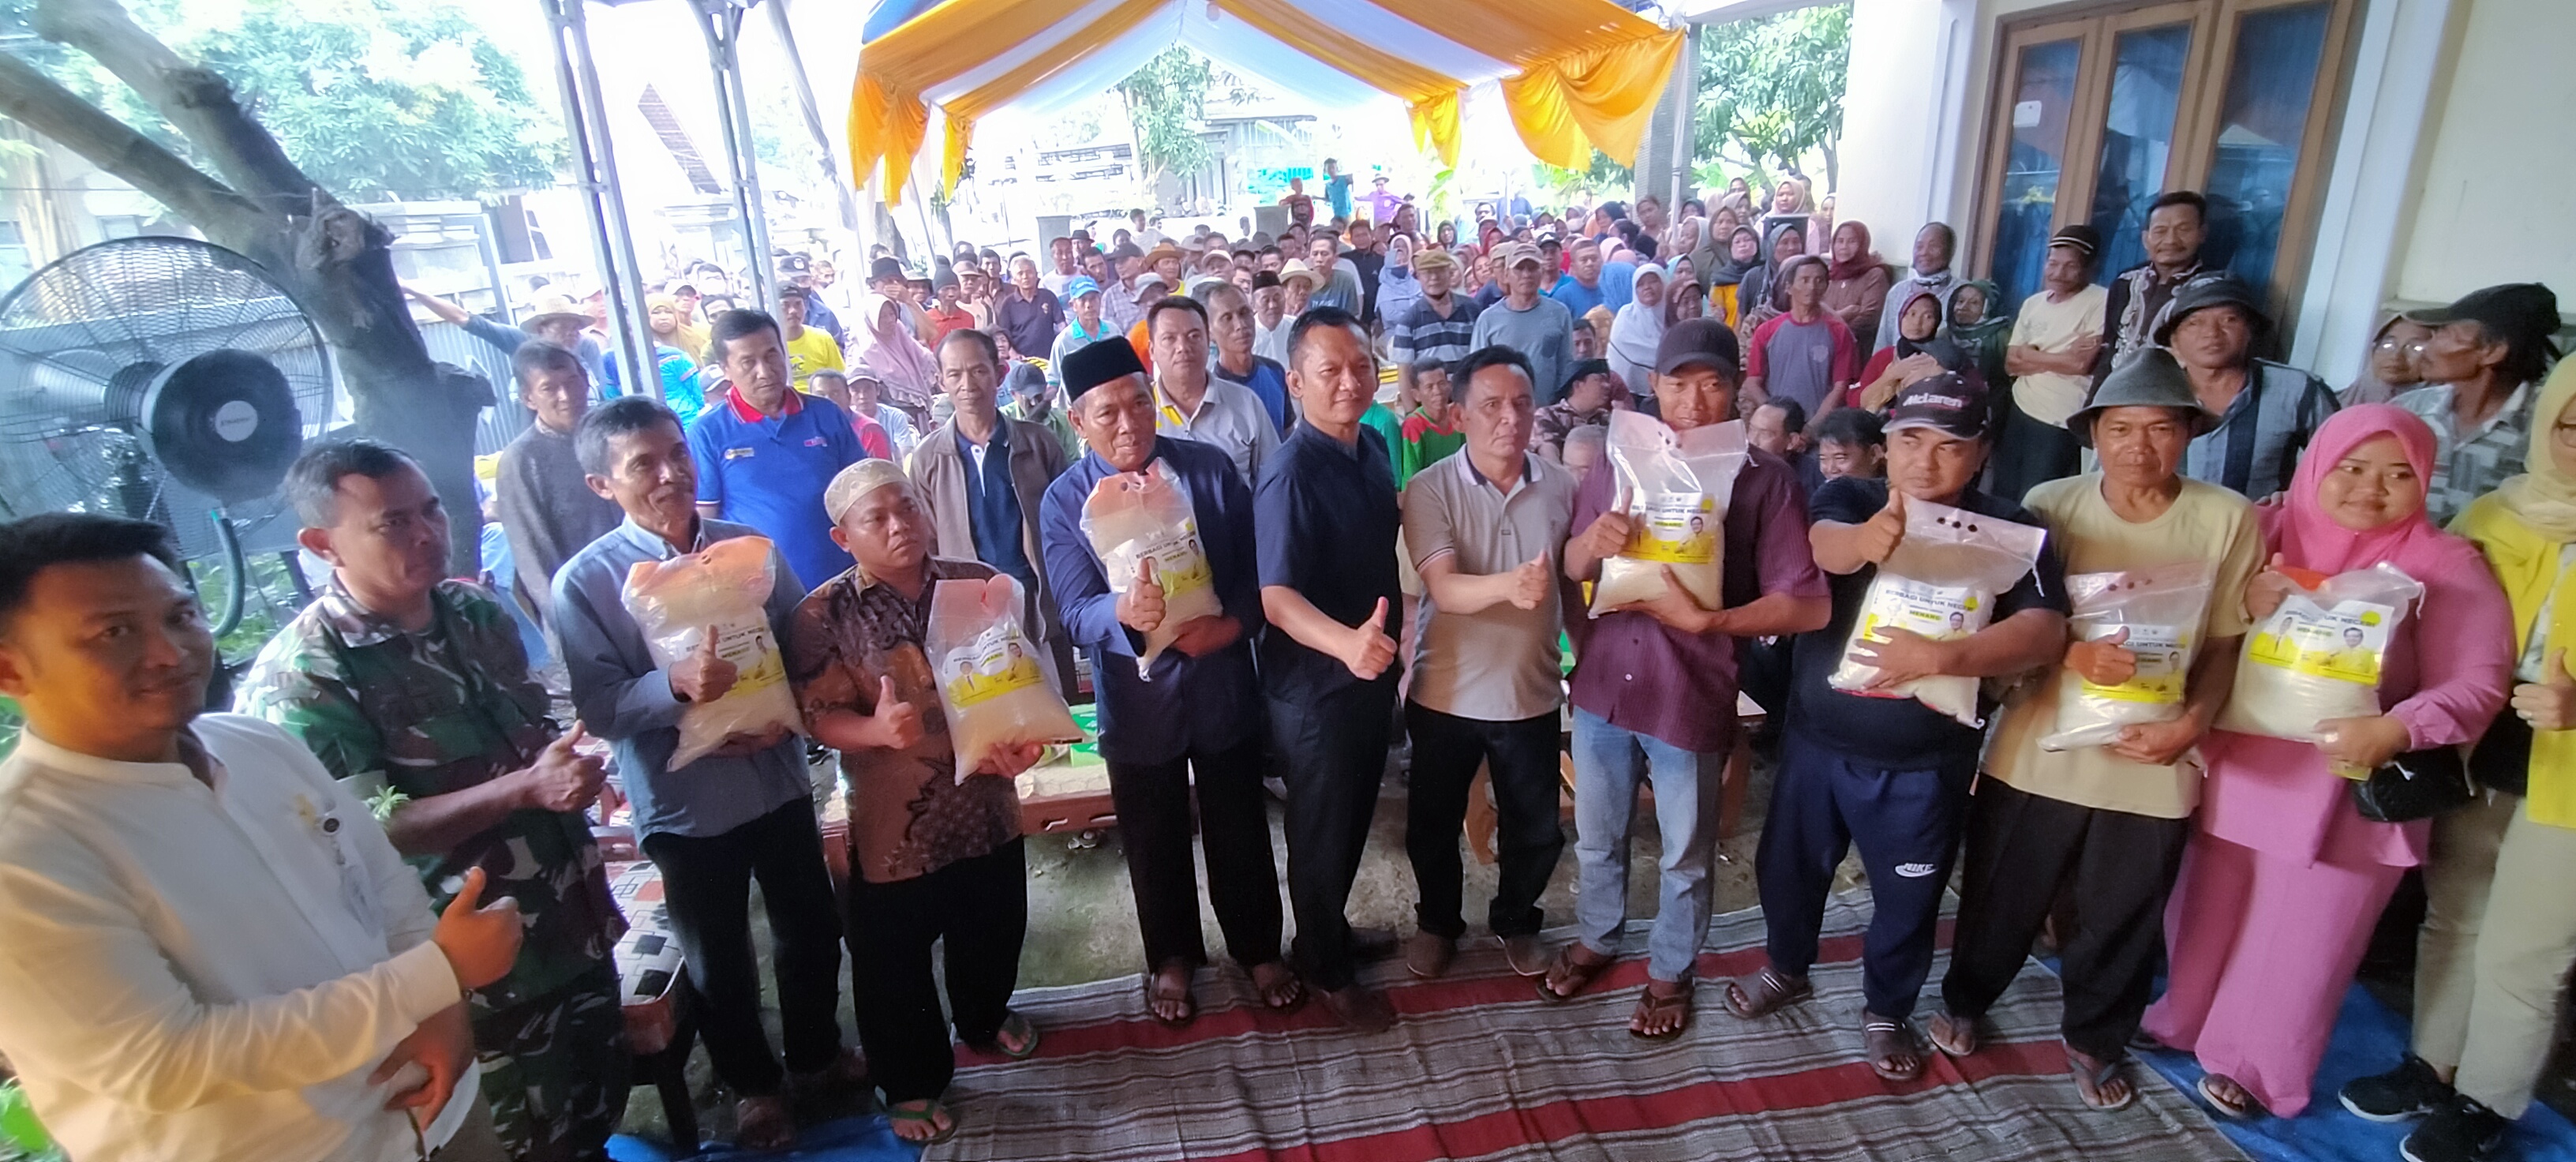 Reses Anggota DPR RI H Bambang Hermanto SE Disambut Antusias Warga, Banjir Ucapan Terima Kasih